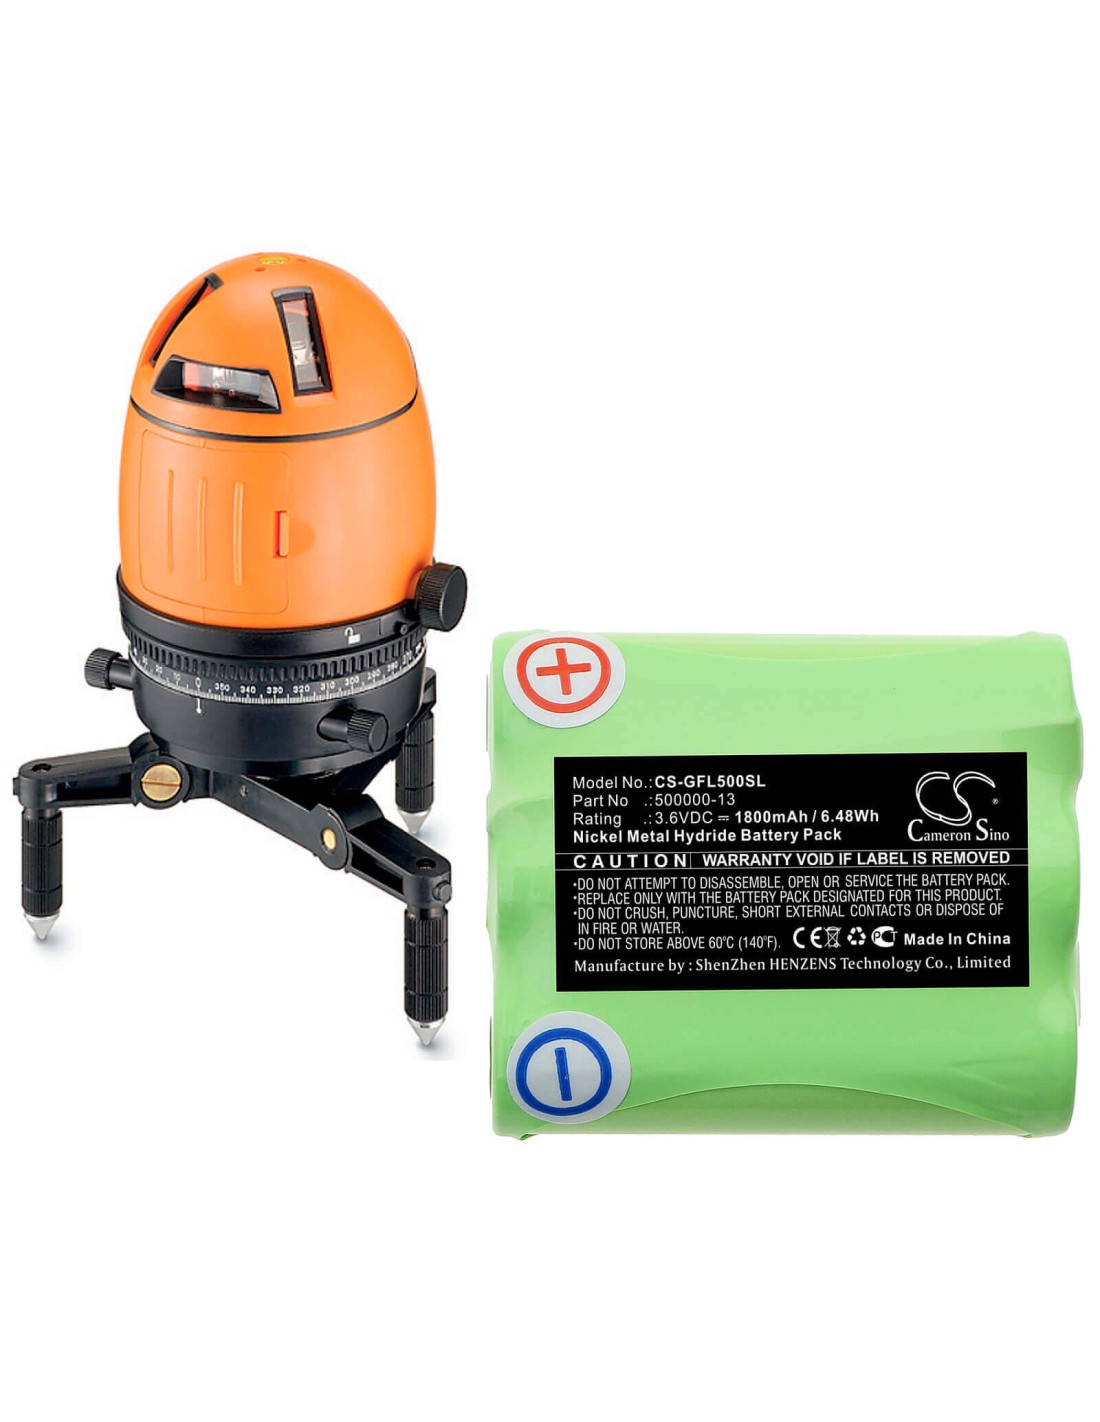 Battery for Linienlaser, Geofennel, Fl, 50 3.6V, 1800mAh - 6.48Wh